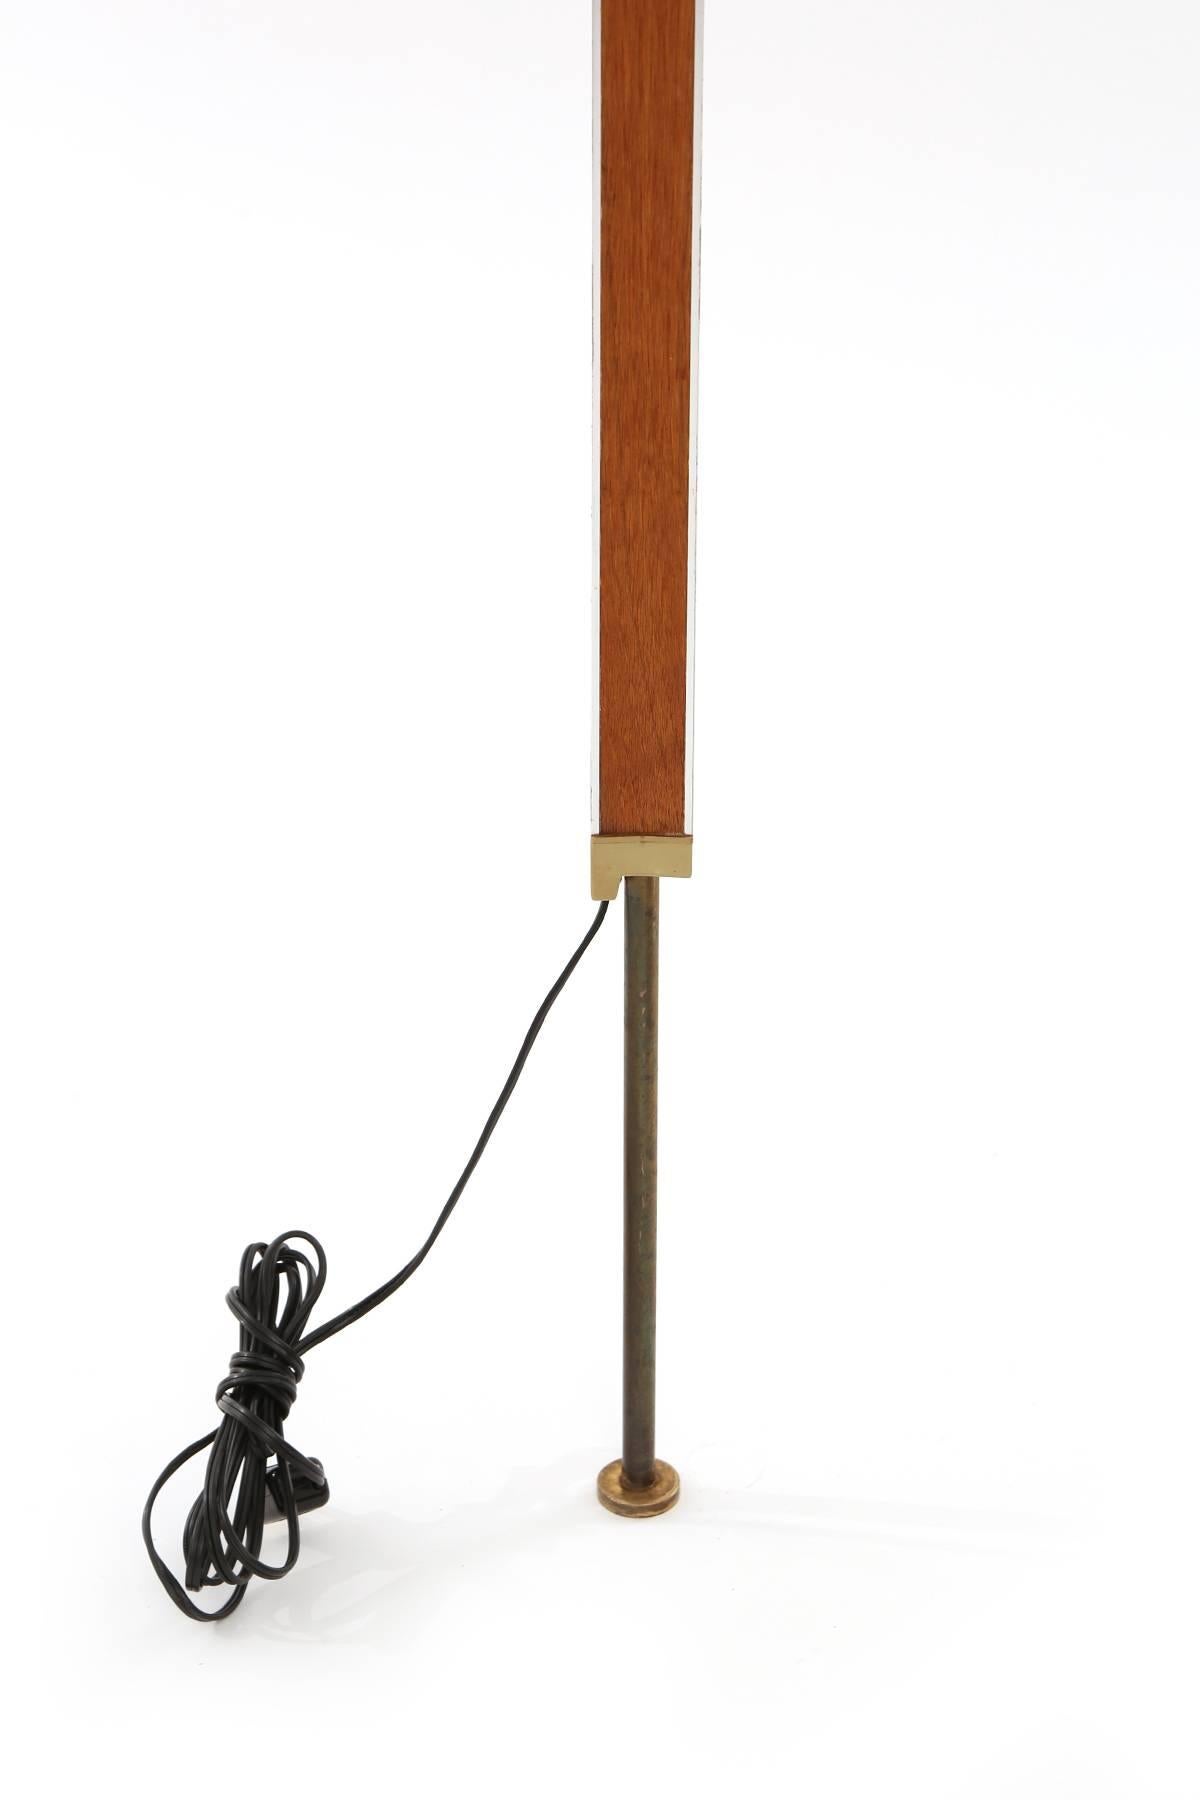 American Gerald Thurston Lightolier Pole Lamp